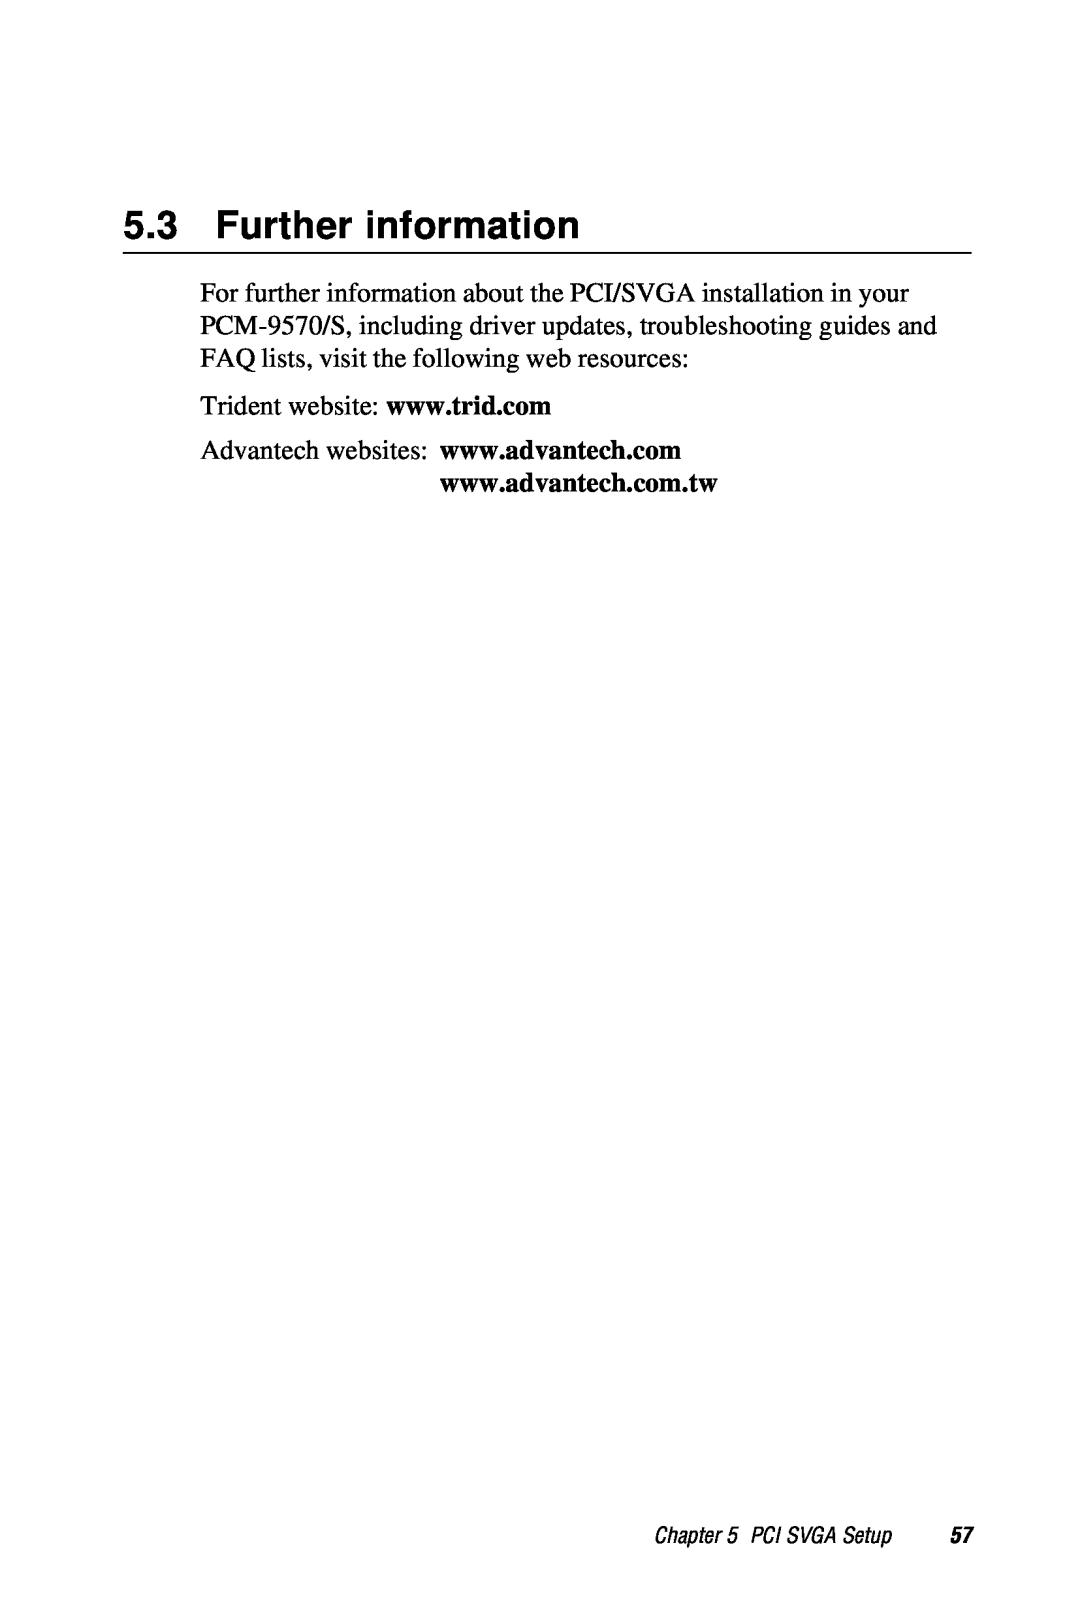 Advantech 2006957006 5th Edition user manual Further information, PCI SVGA Setup 